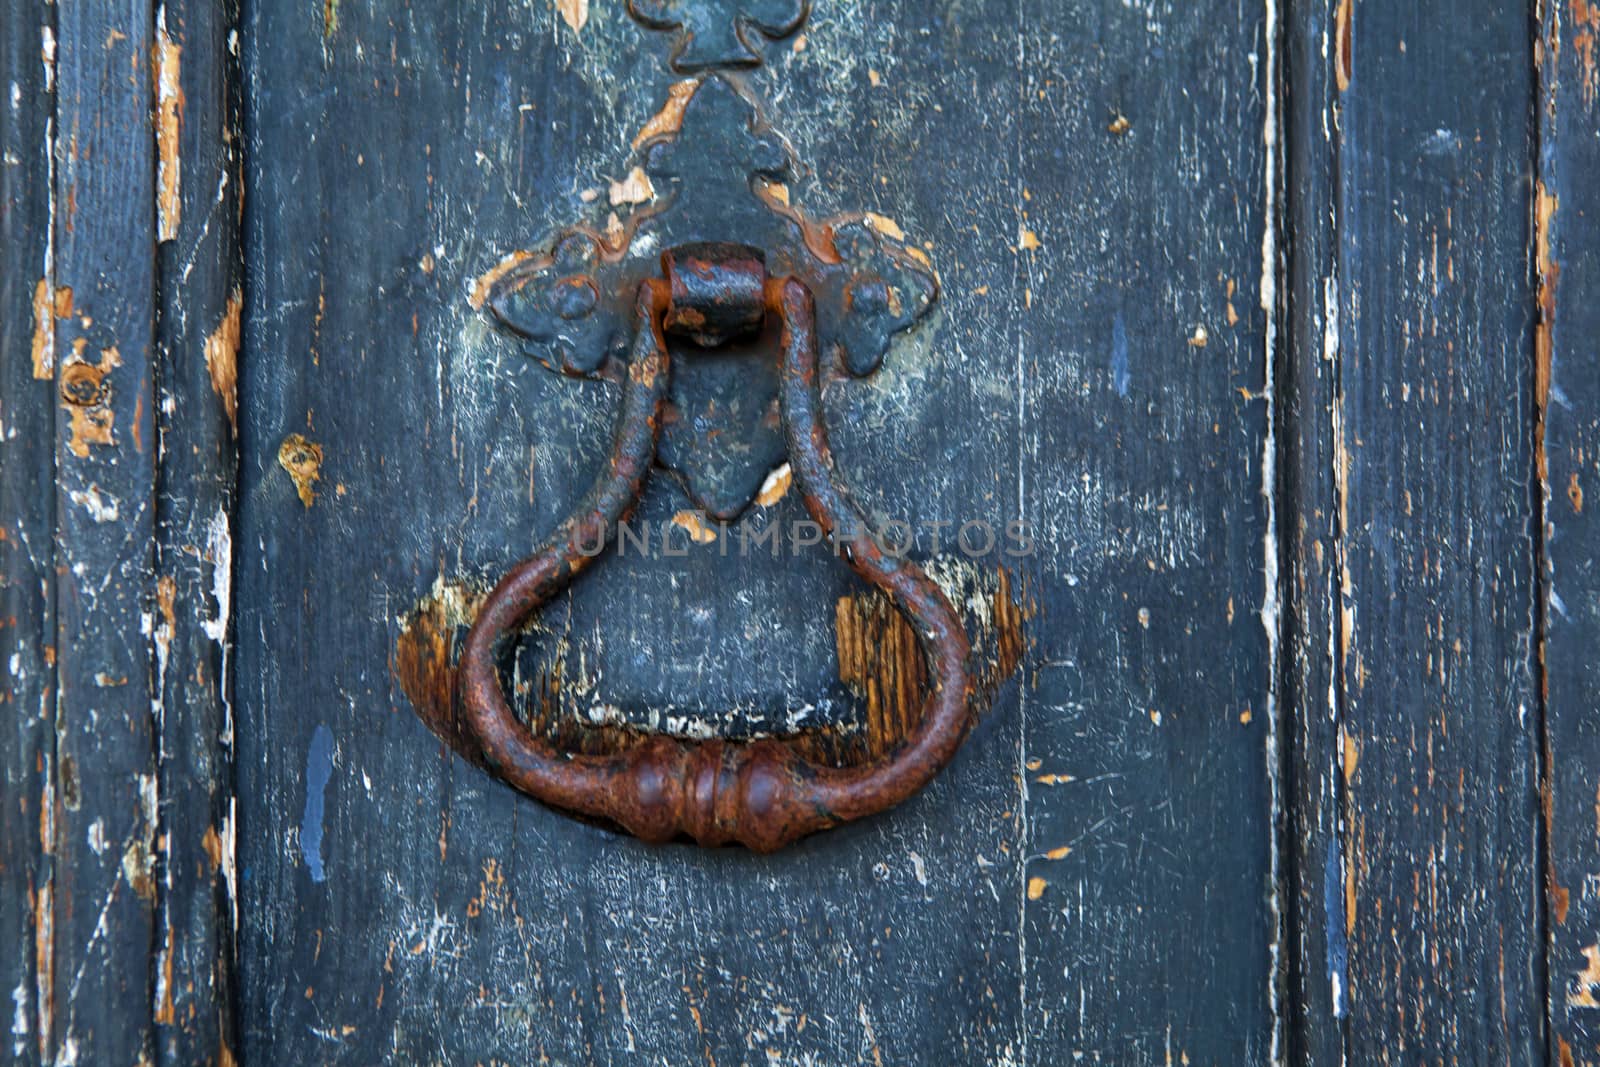 Brass  knocker on old wooden door in Lisbon